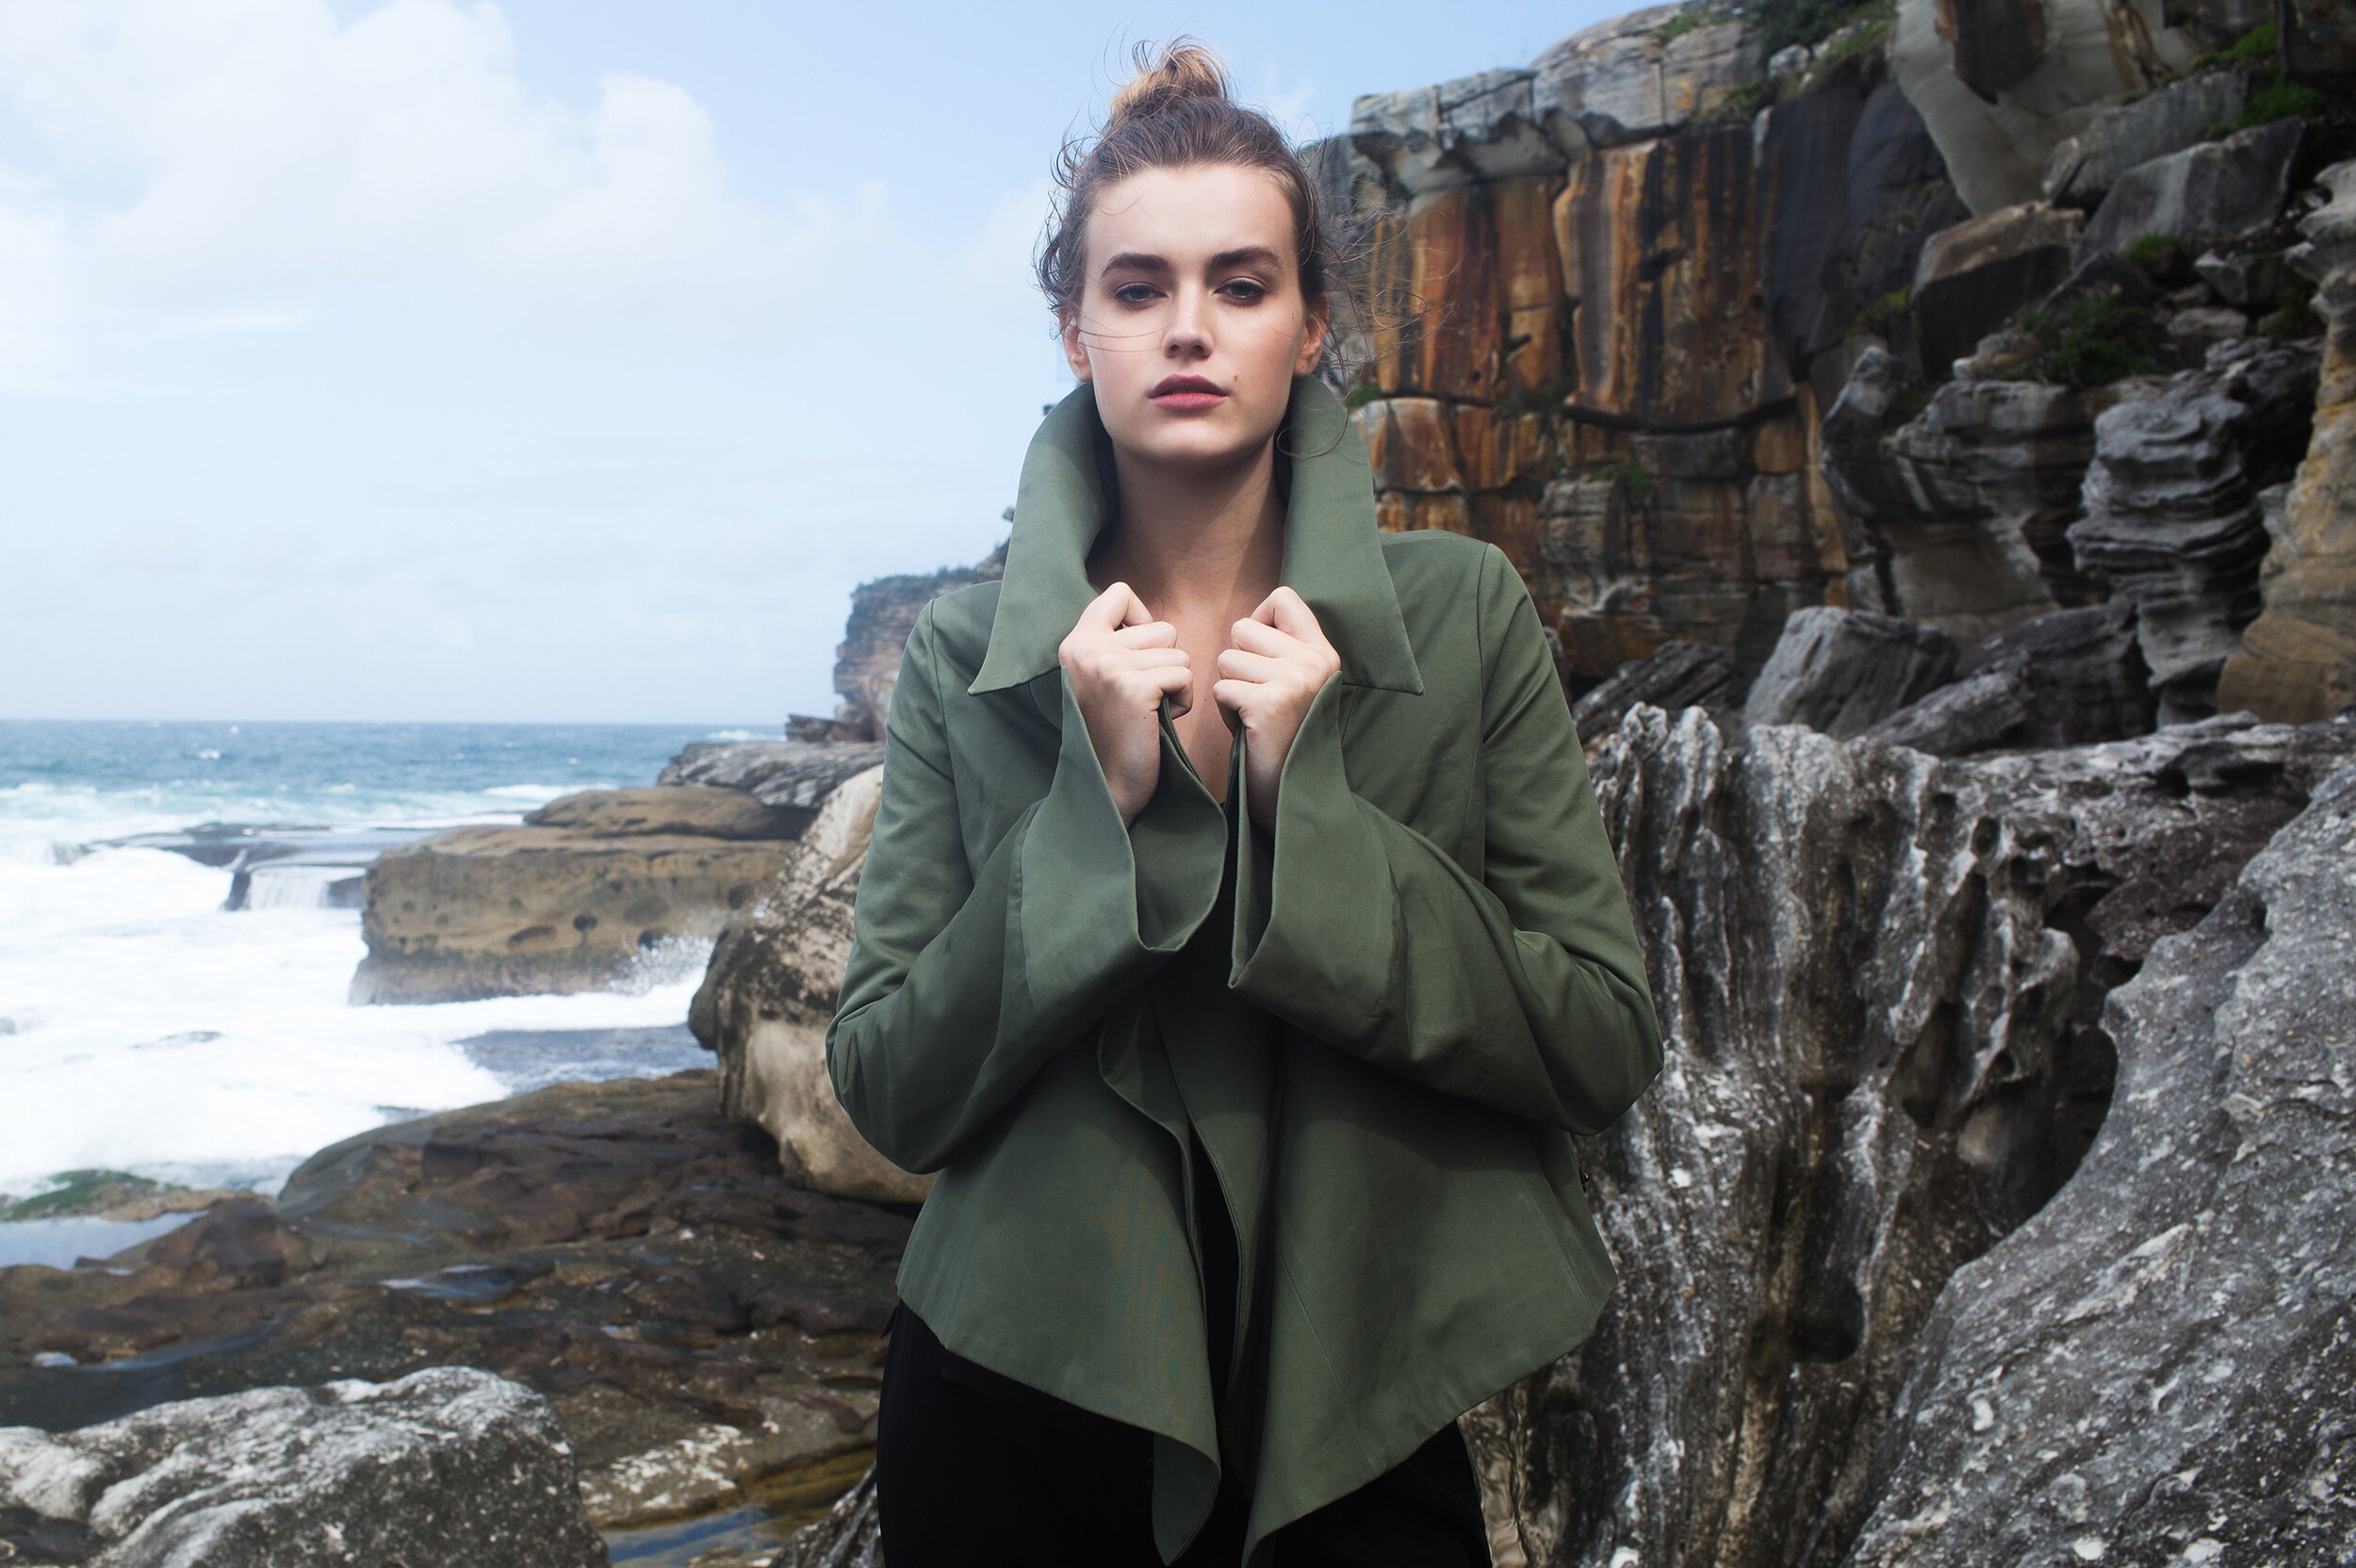 model fashion sydney cliff face cinematic photographer mediam rare.jpg